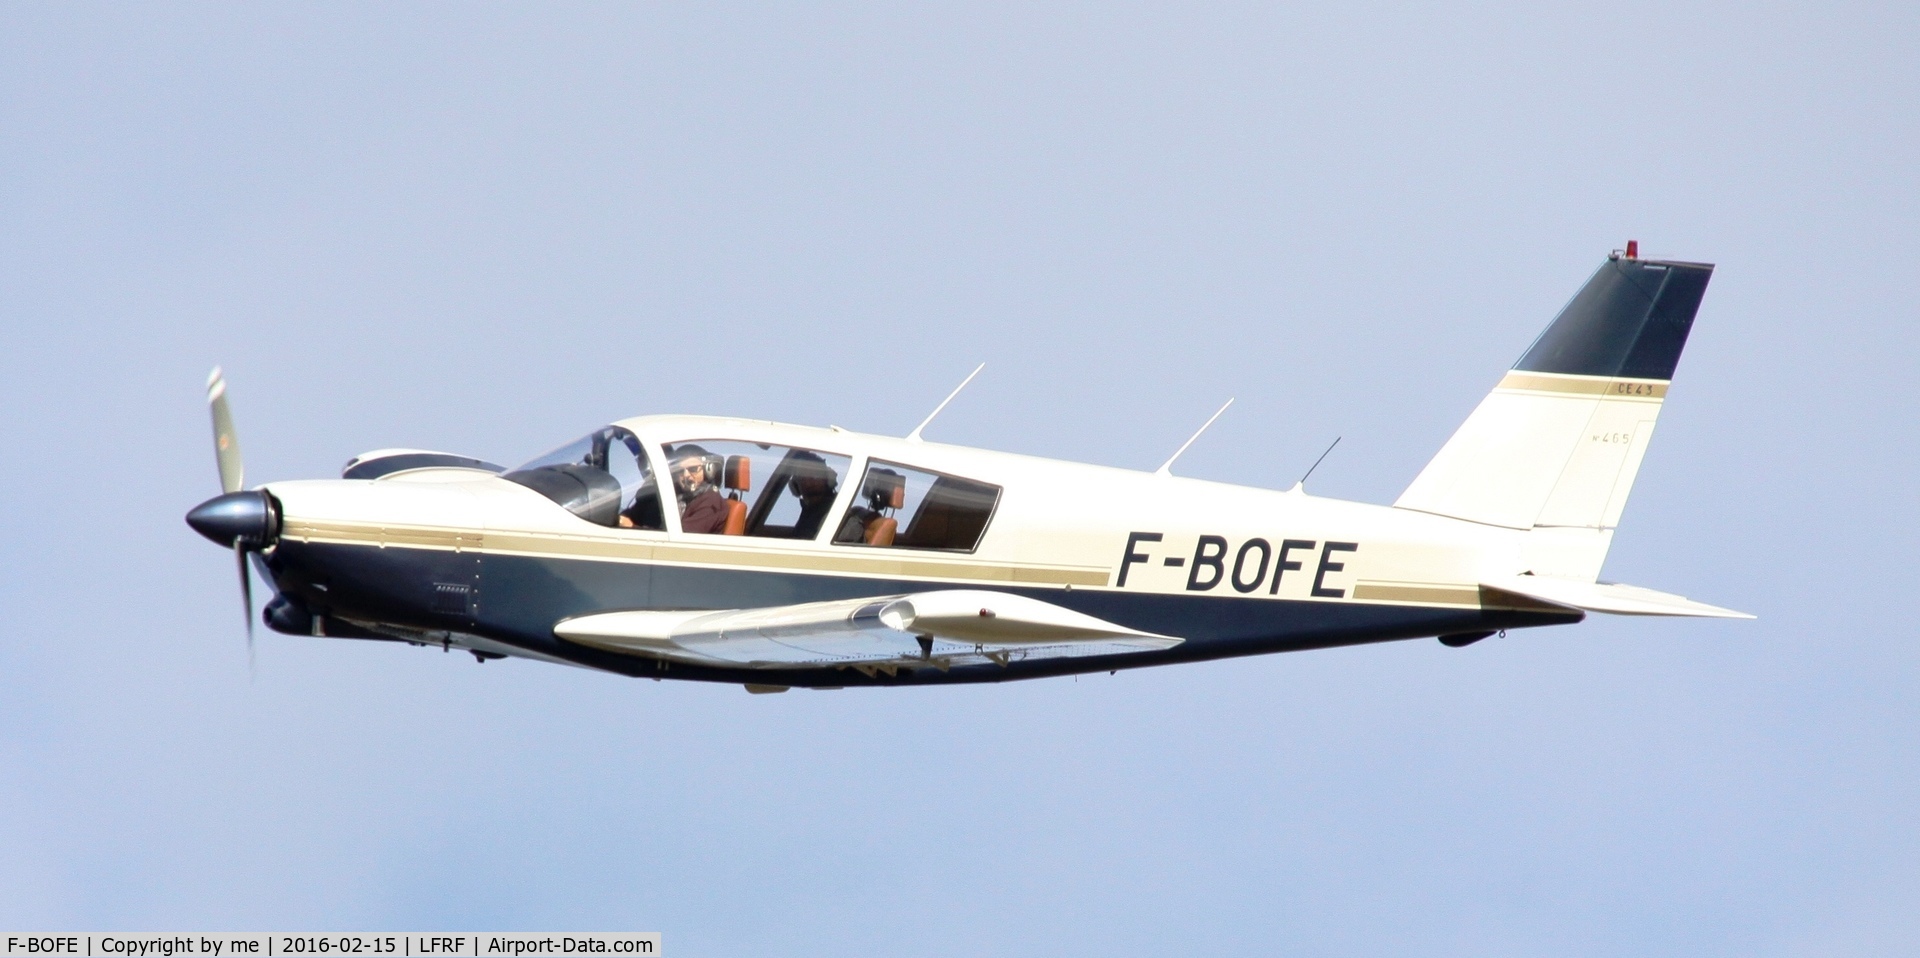 F-BOFE, Wassmer (Cerva) CE-43 Guepard C/N 465, My plane, CE 43 , serial 465, 5 seats, motor IO540-C4B5